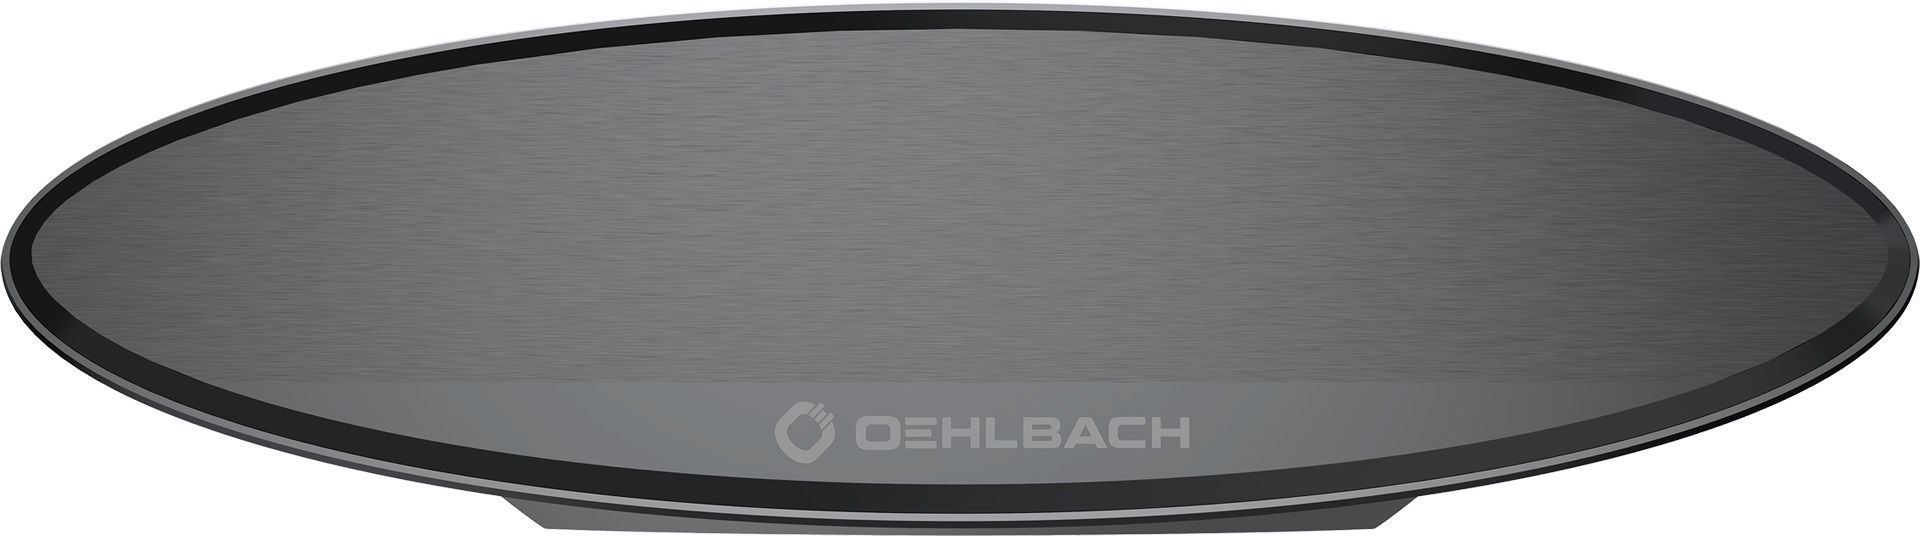 Oehlbach Scope Oval DVB-T2, DVB-T2 HD digitális tv antenna fekete OB 1...